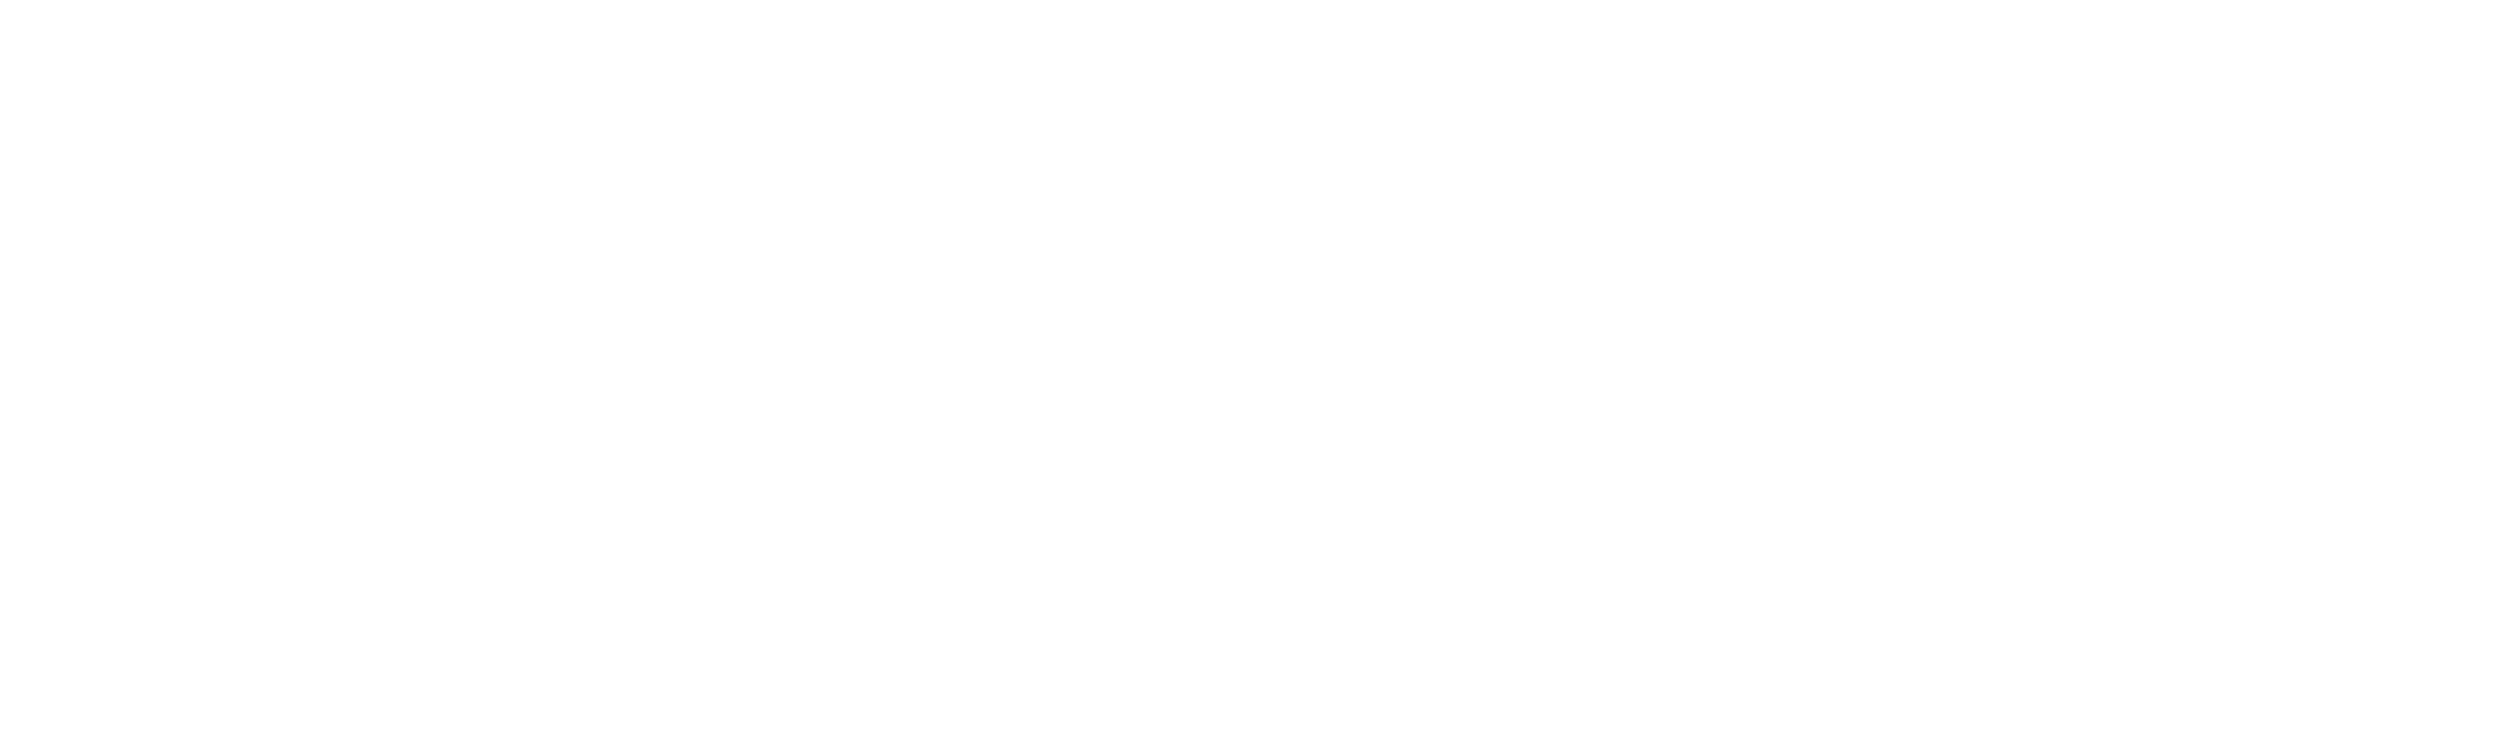 Opus Vox | Executive Communication Advisors